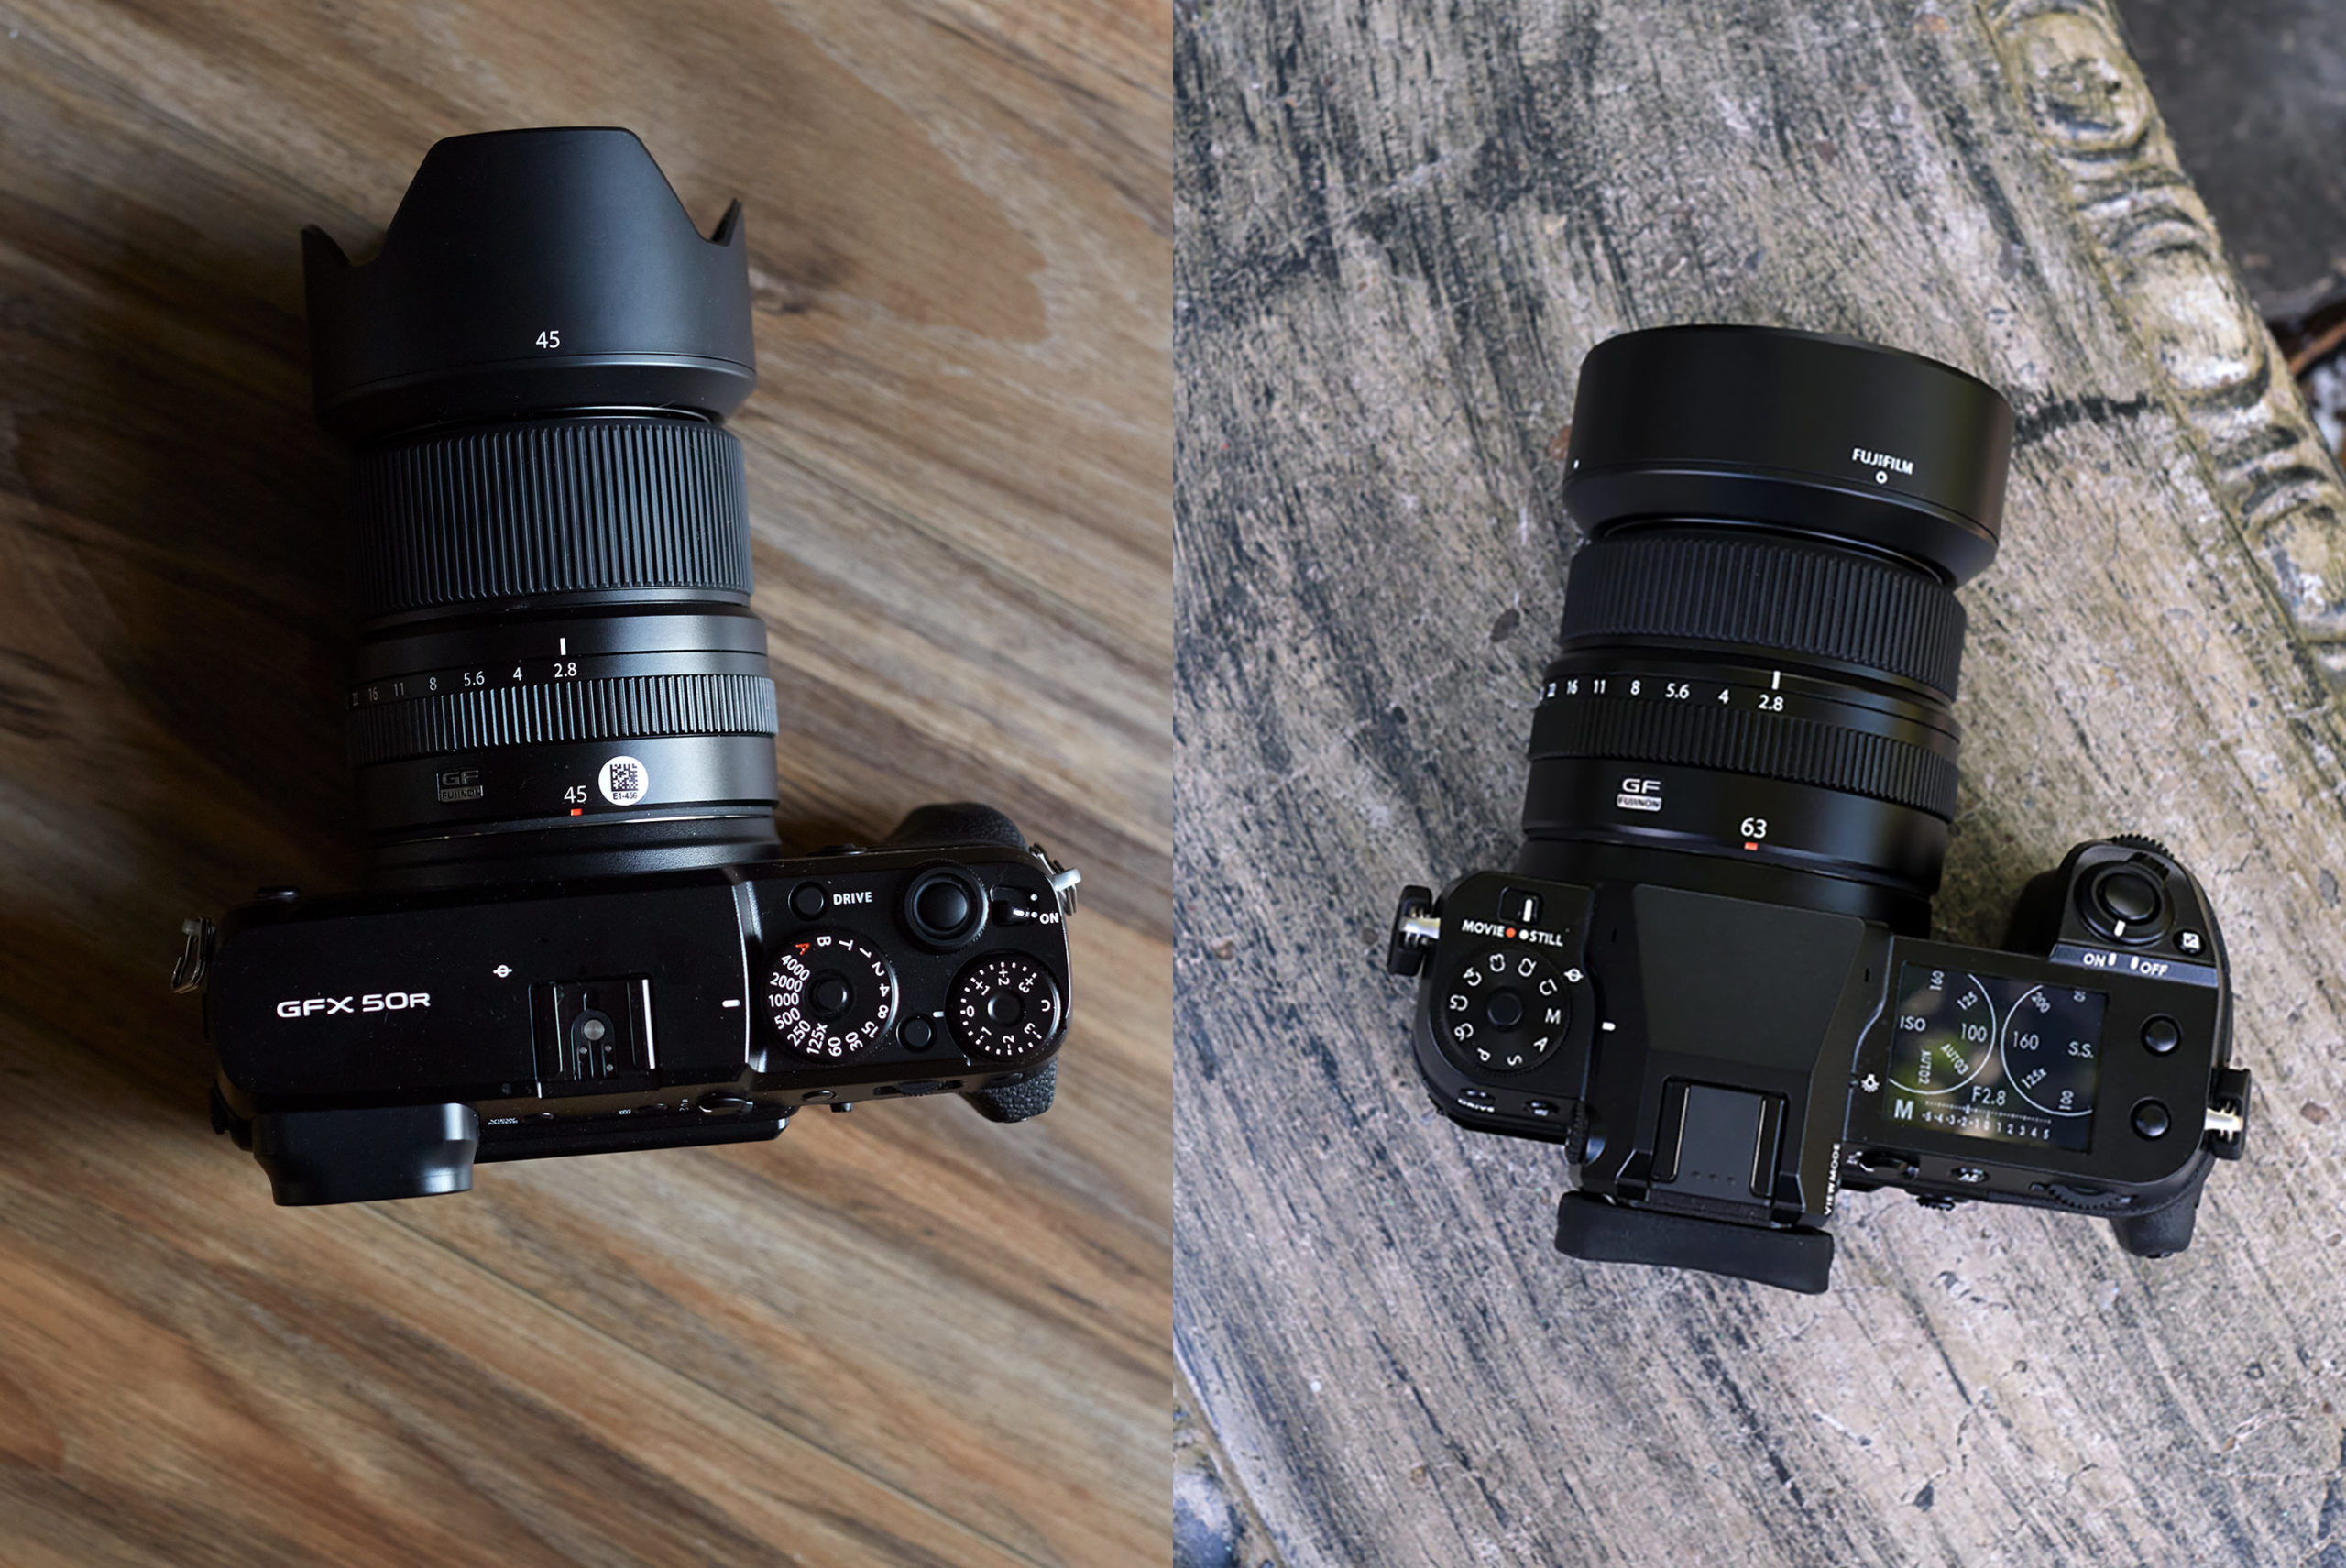 ondersteboven Kan weerstaan Streven Fujifilm GFX Rangefinder VS SLR Design - Which Is Better?